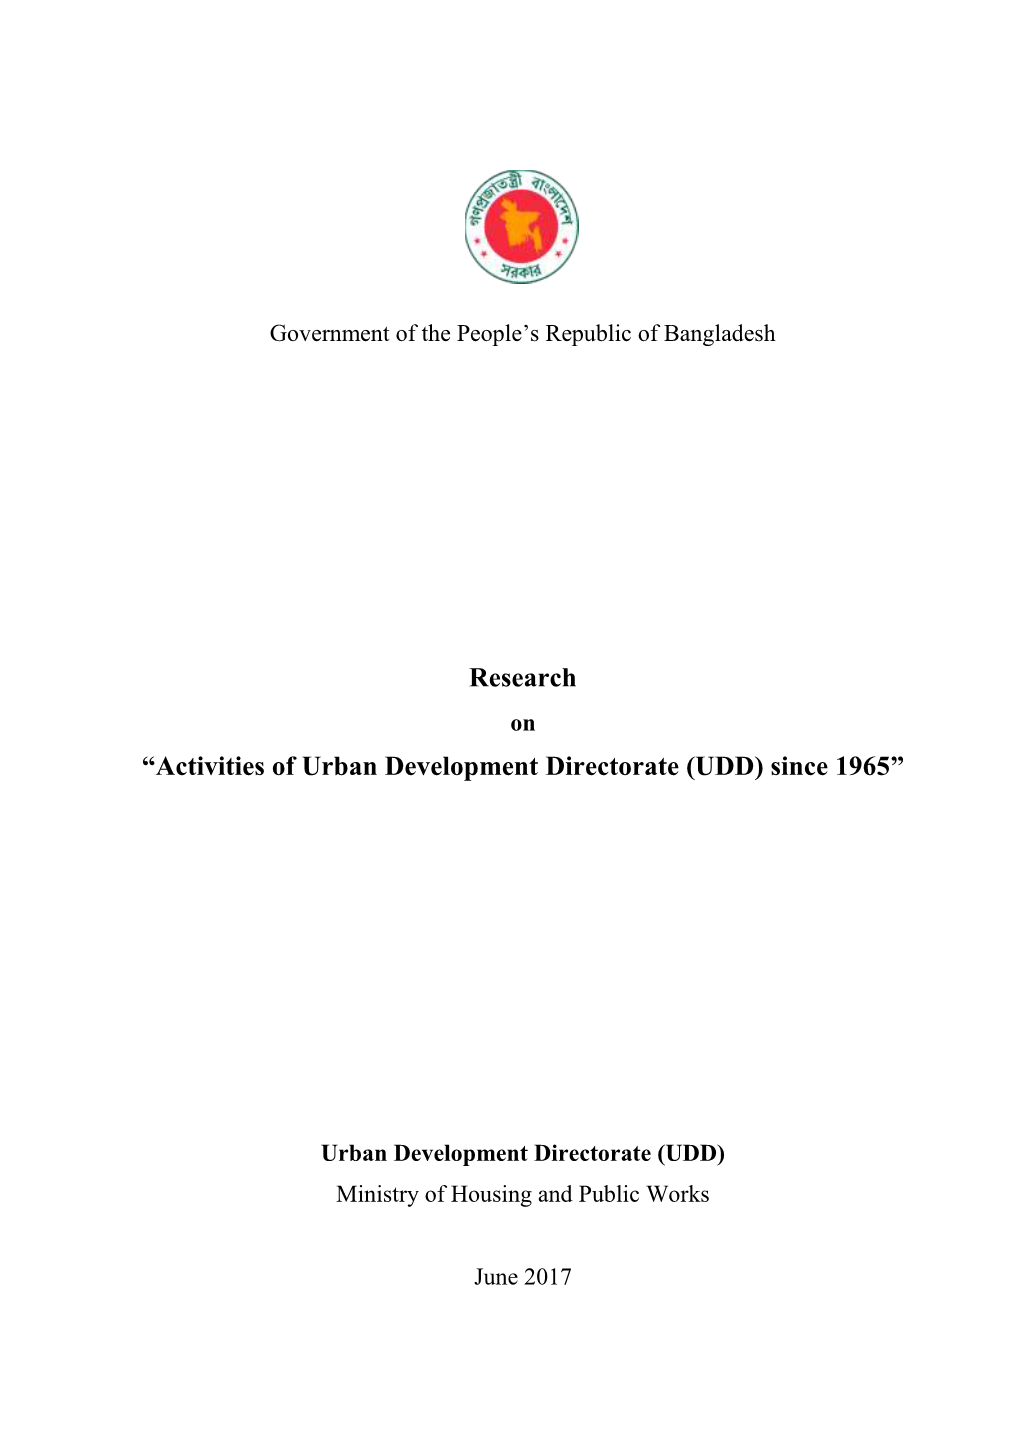 Research “Activities of Urban Development Directorate (UDD) Since 1965”